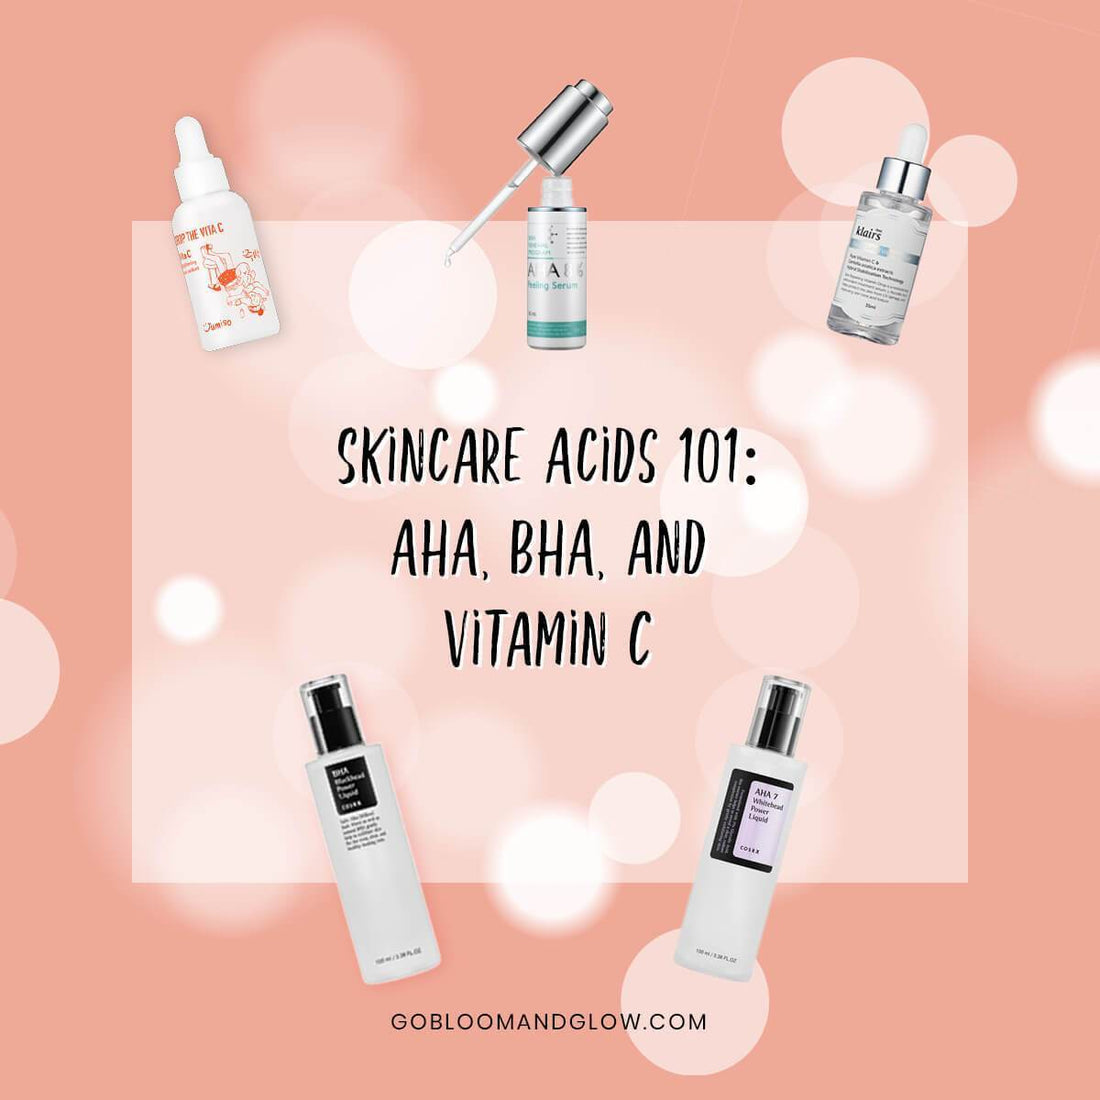 Skincare Acids 101: AHA, BHA, and Vitamin C